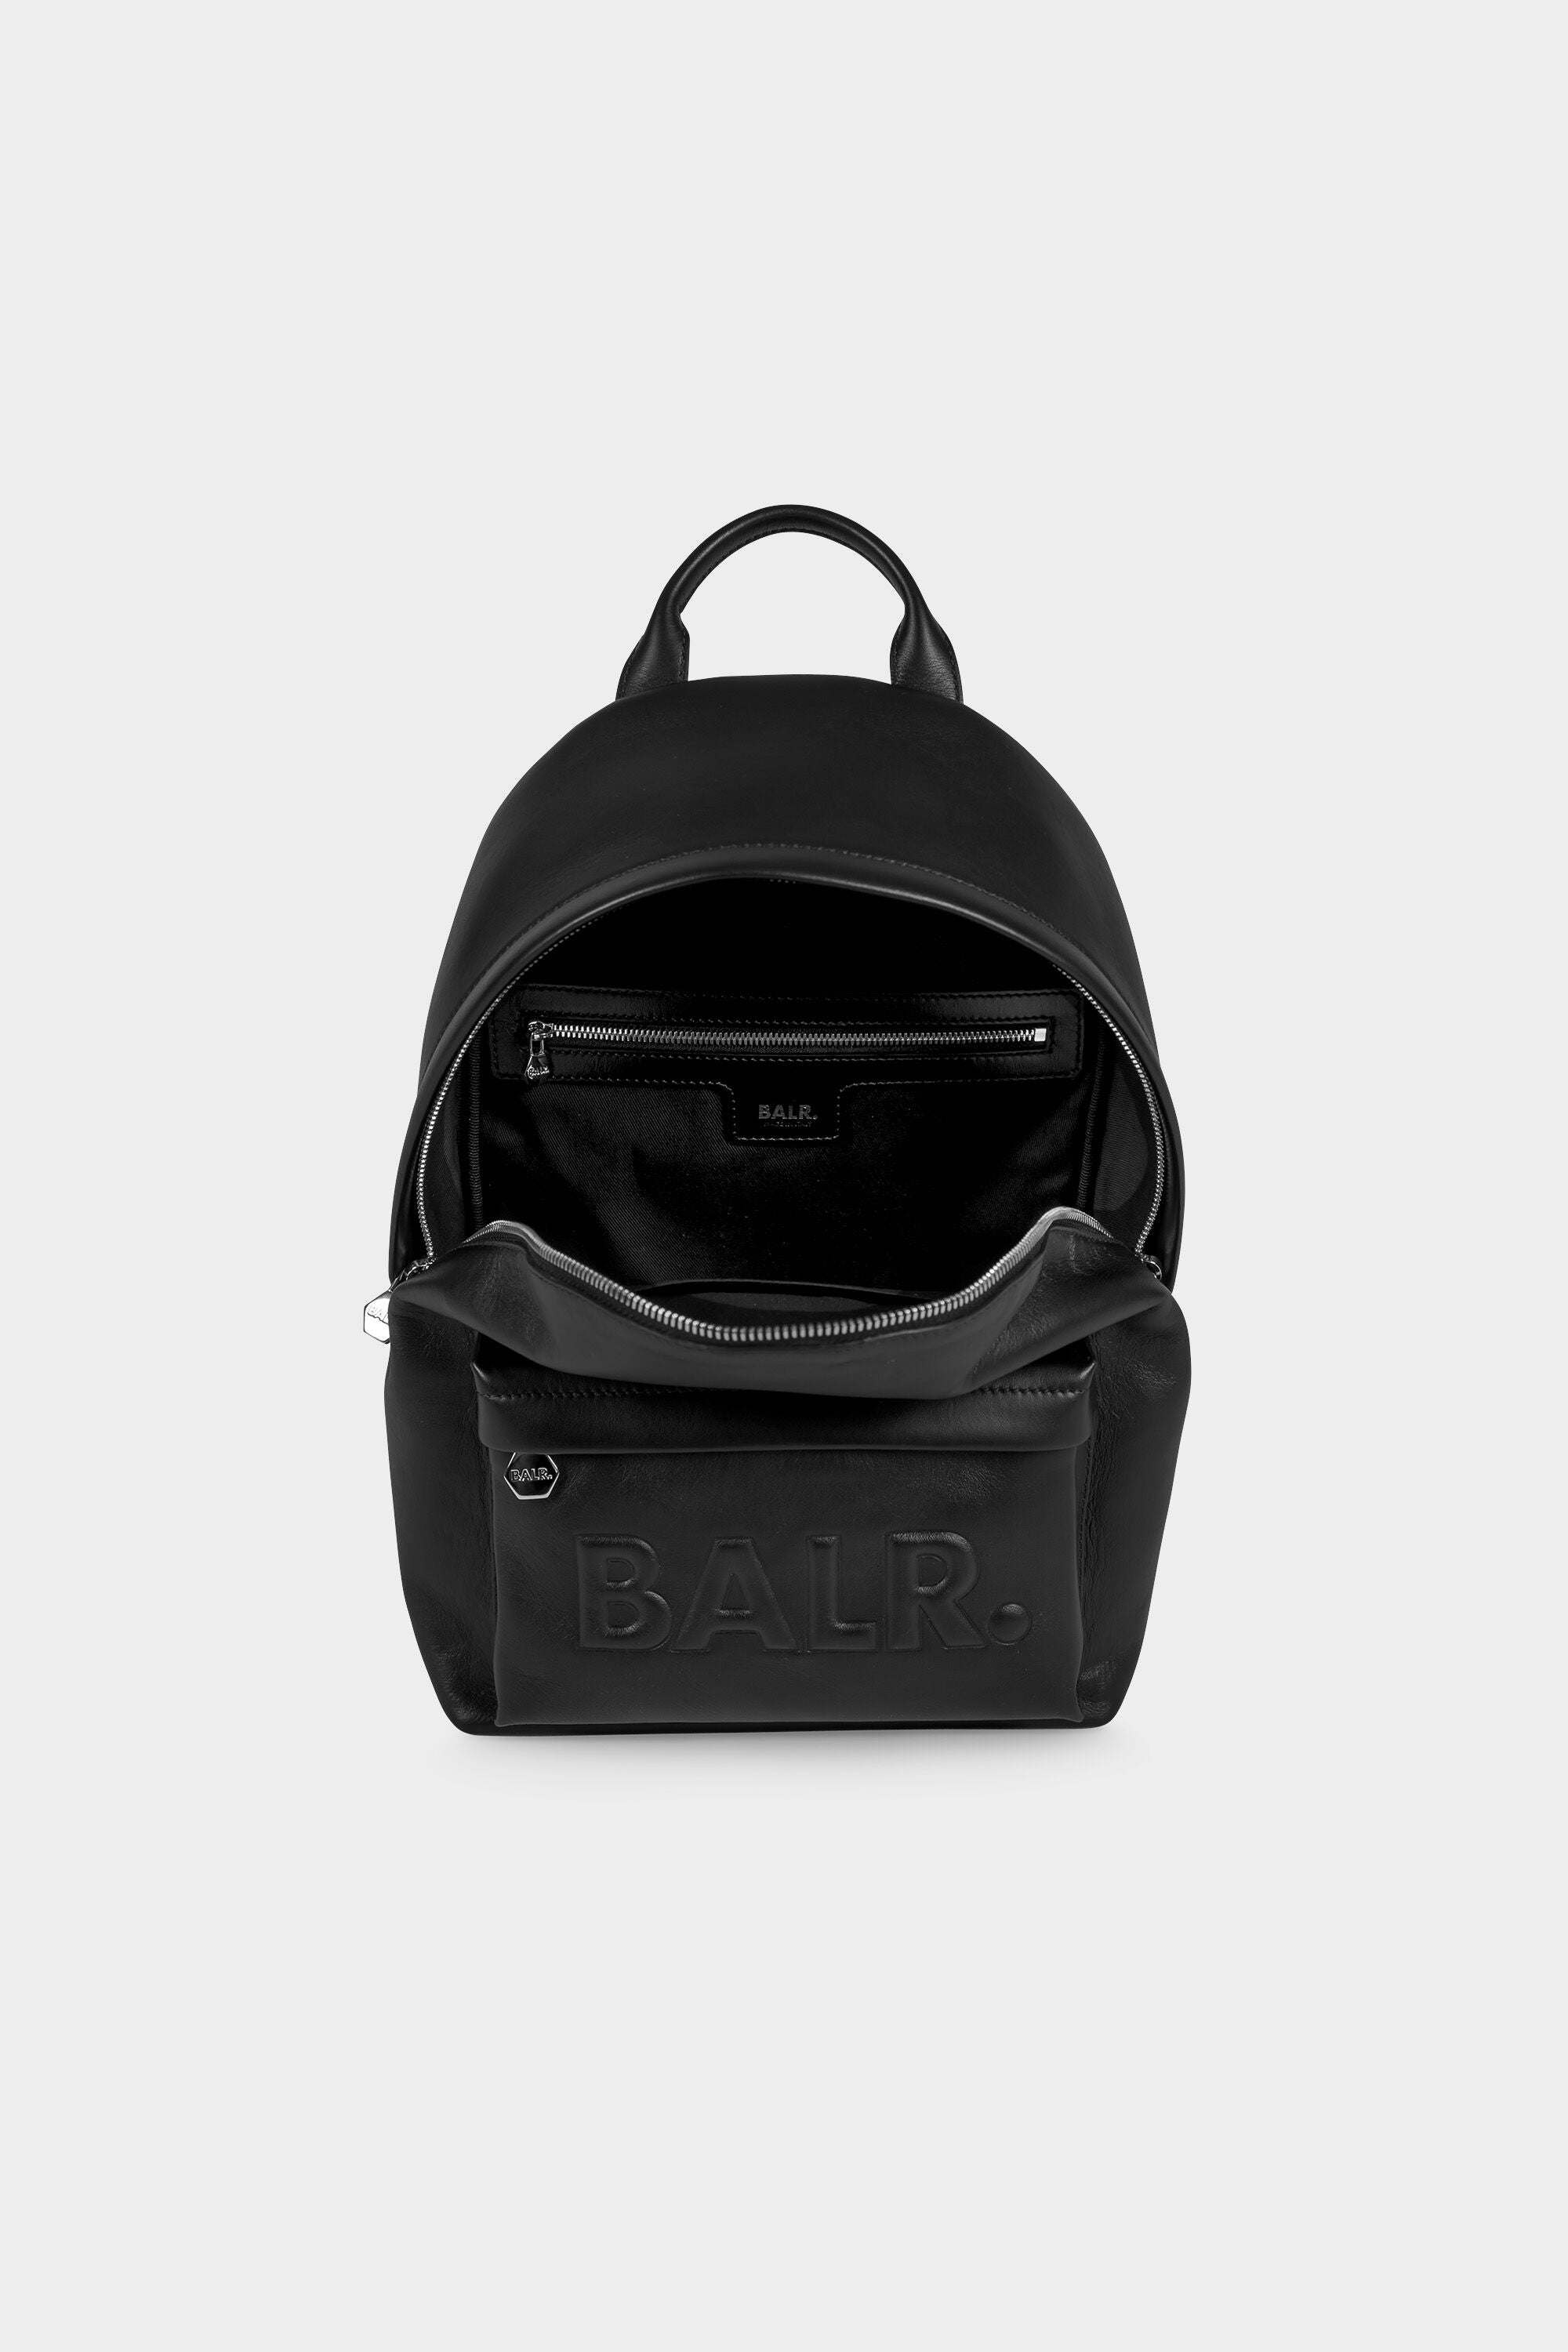 BT Leather Petite Backpack Black